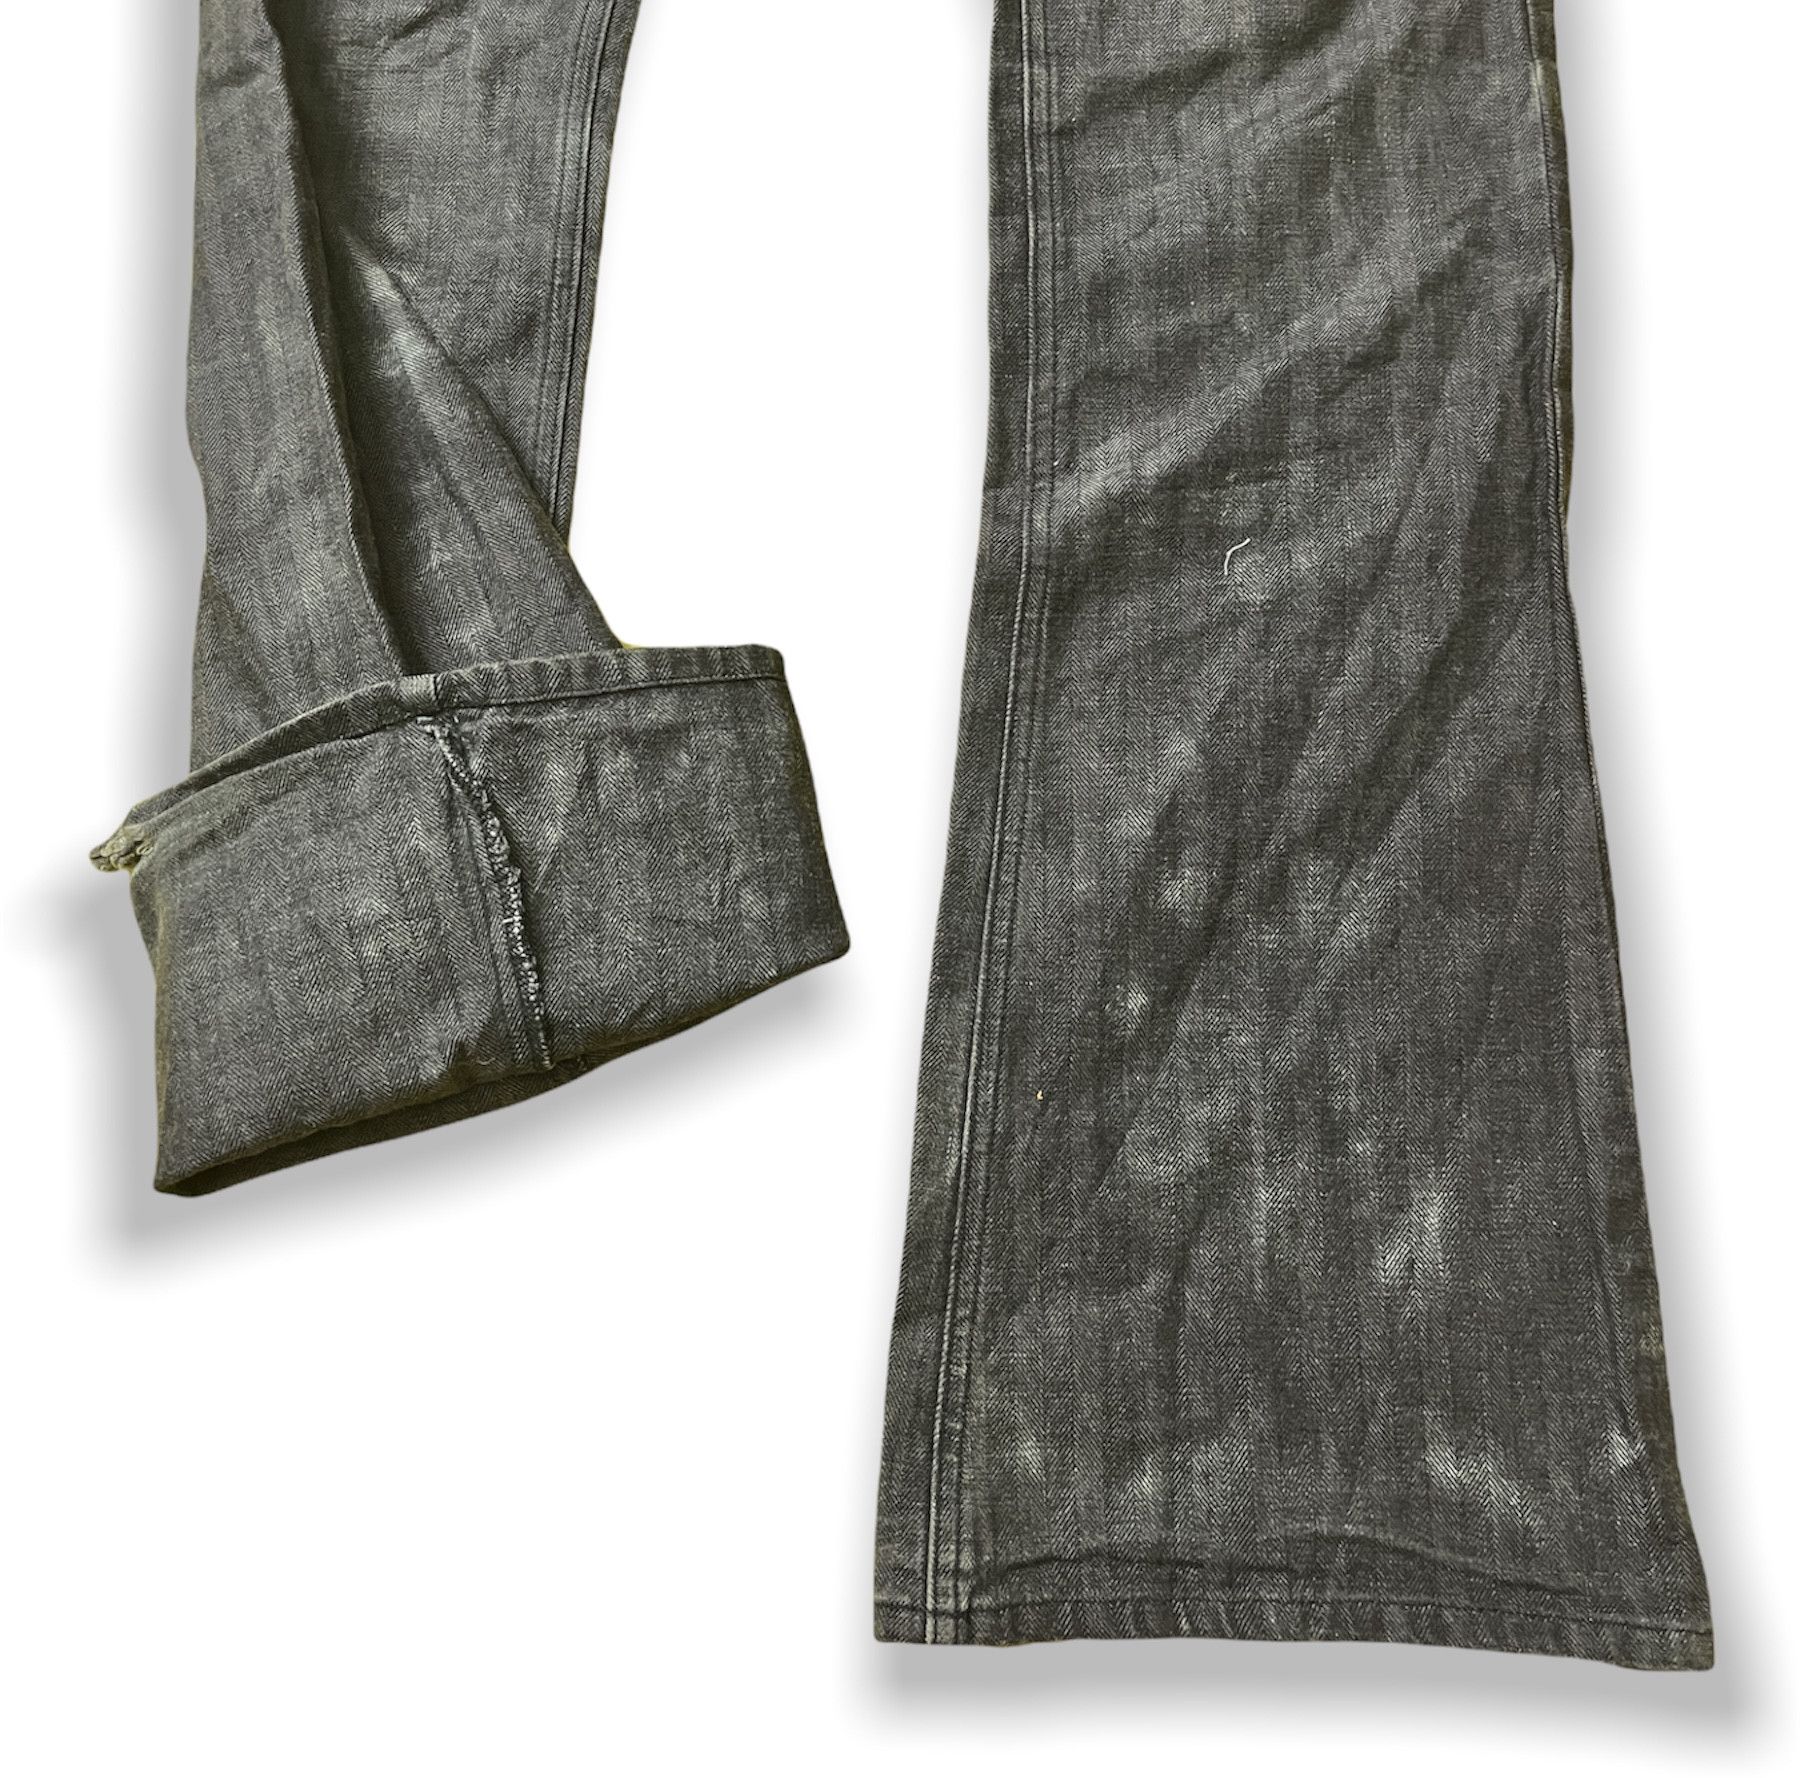 Japanese Brand - Distressed EDGE RUPERT Flare Denim Jeans HISTERIC STYLE - 9